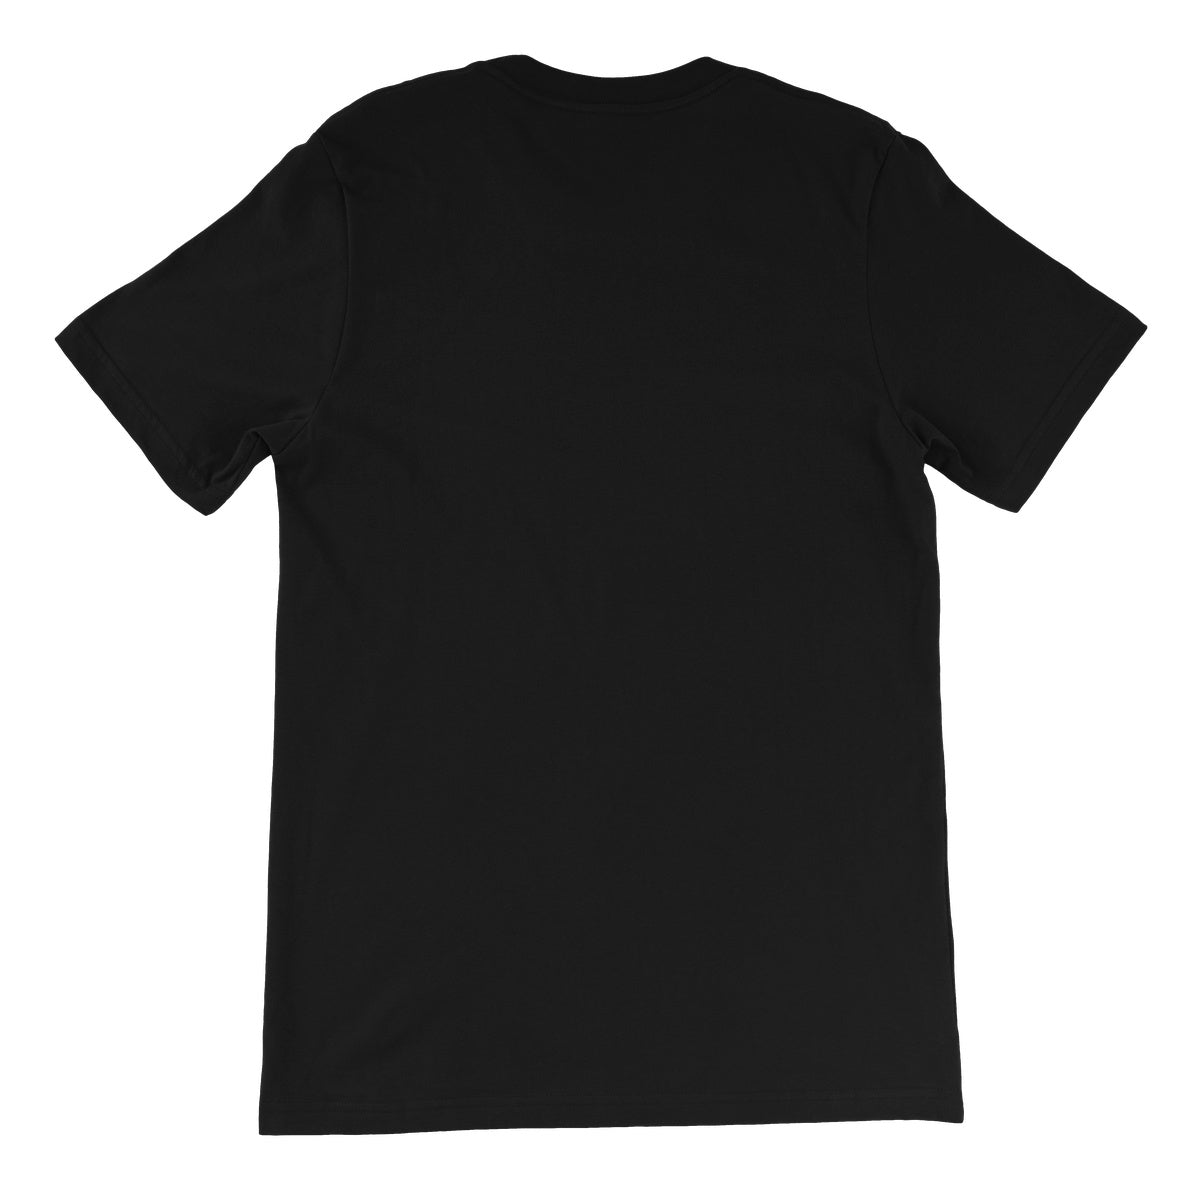 Bound For Glory 2020 - Rosemary/Taya/Bravo Unisex Short Sleeve T-Shirt